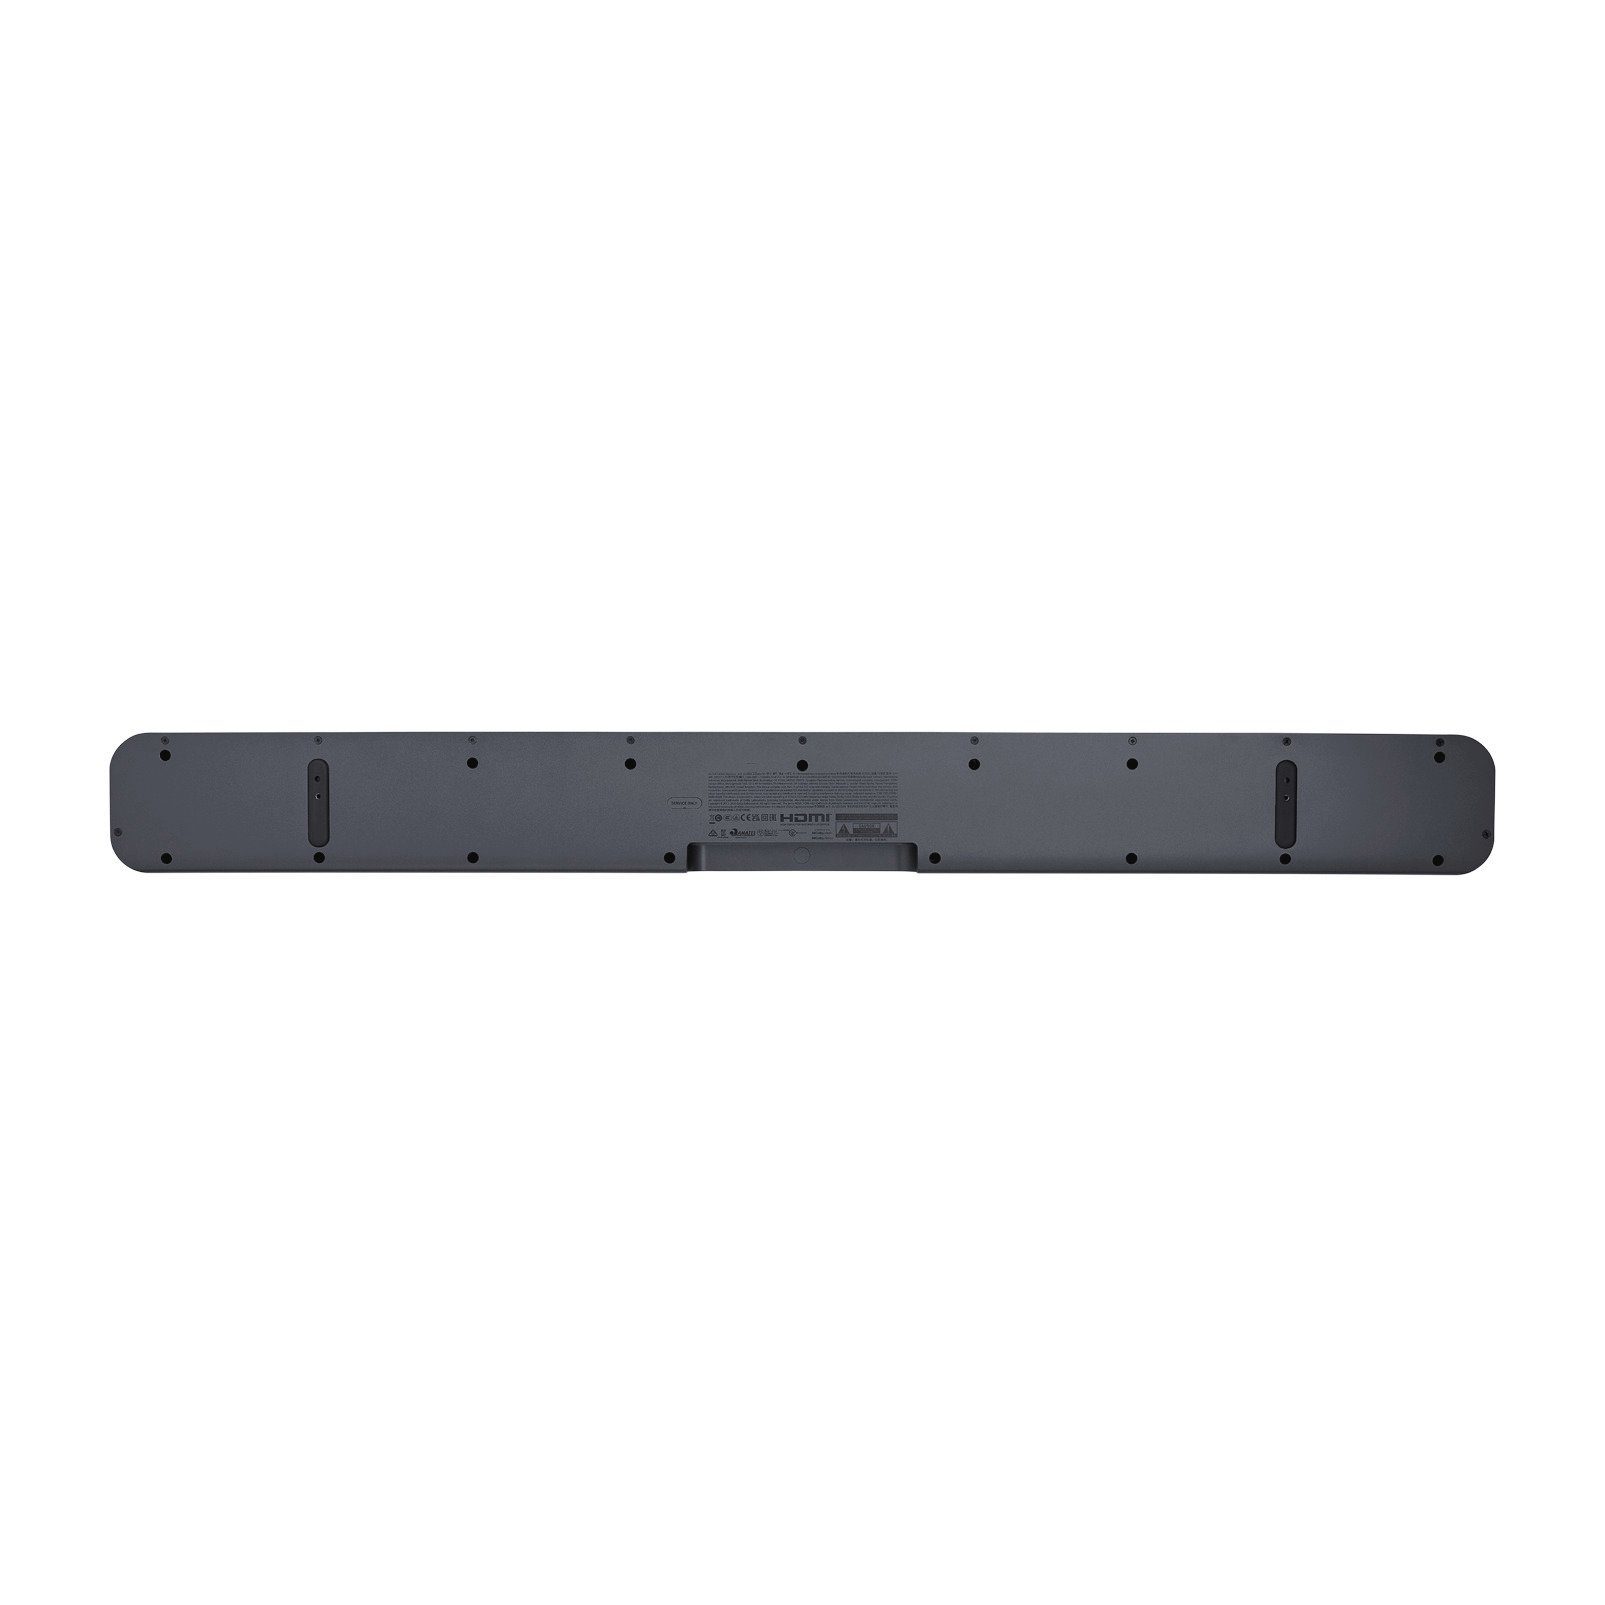 JBL Bar 500 Pro Soundbar (WLAN, 590 W)